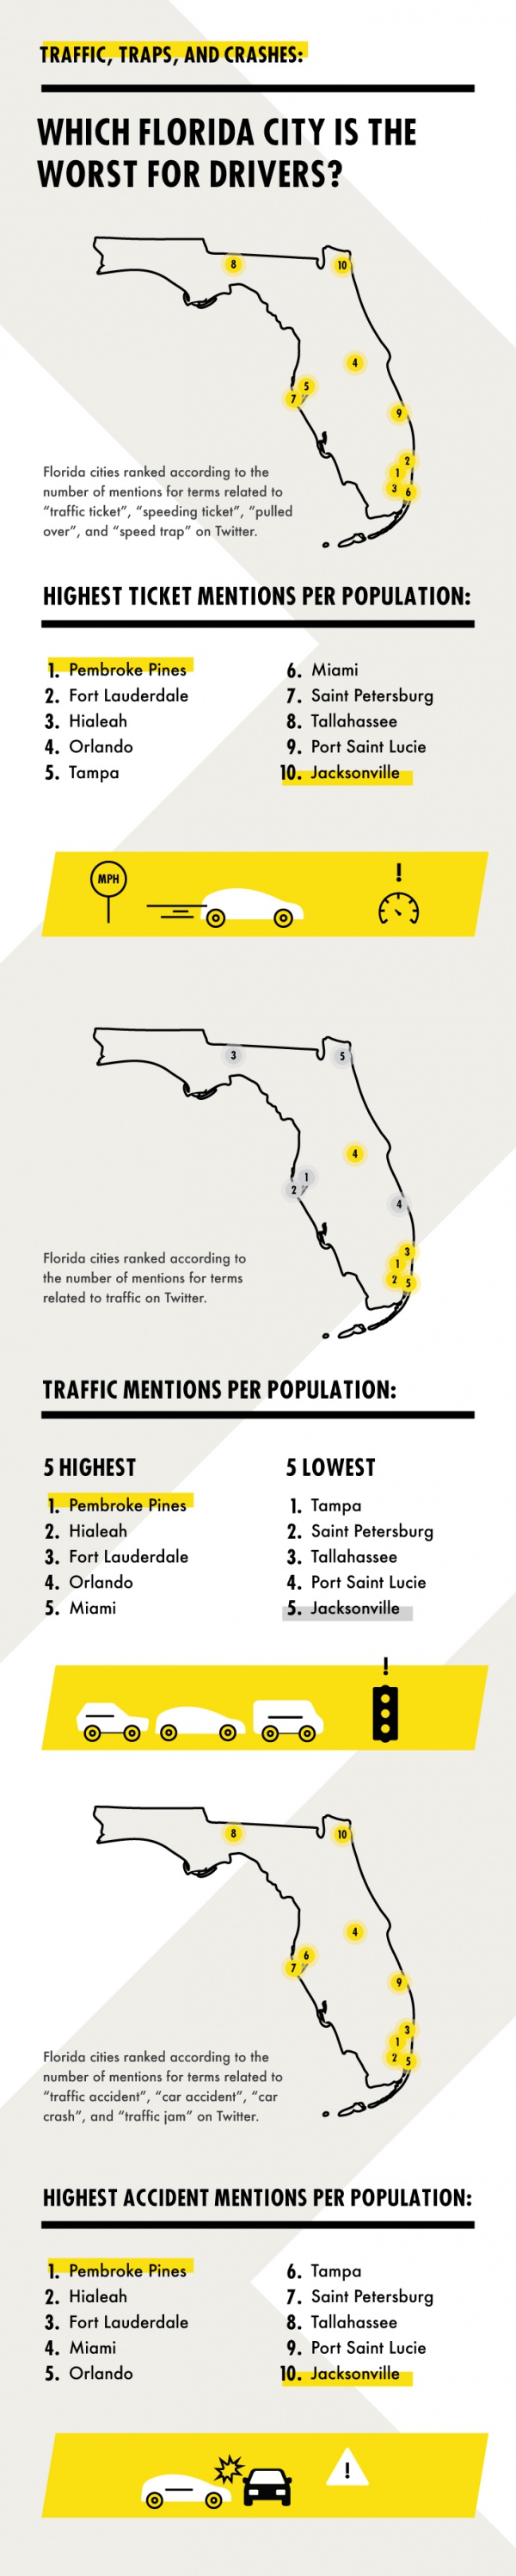 Traffic-Traps-Crashes-Florida